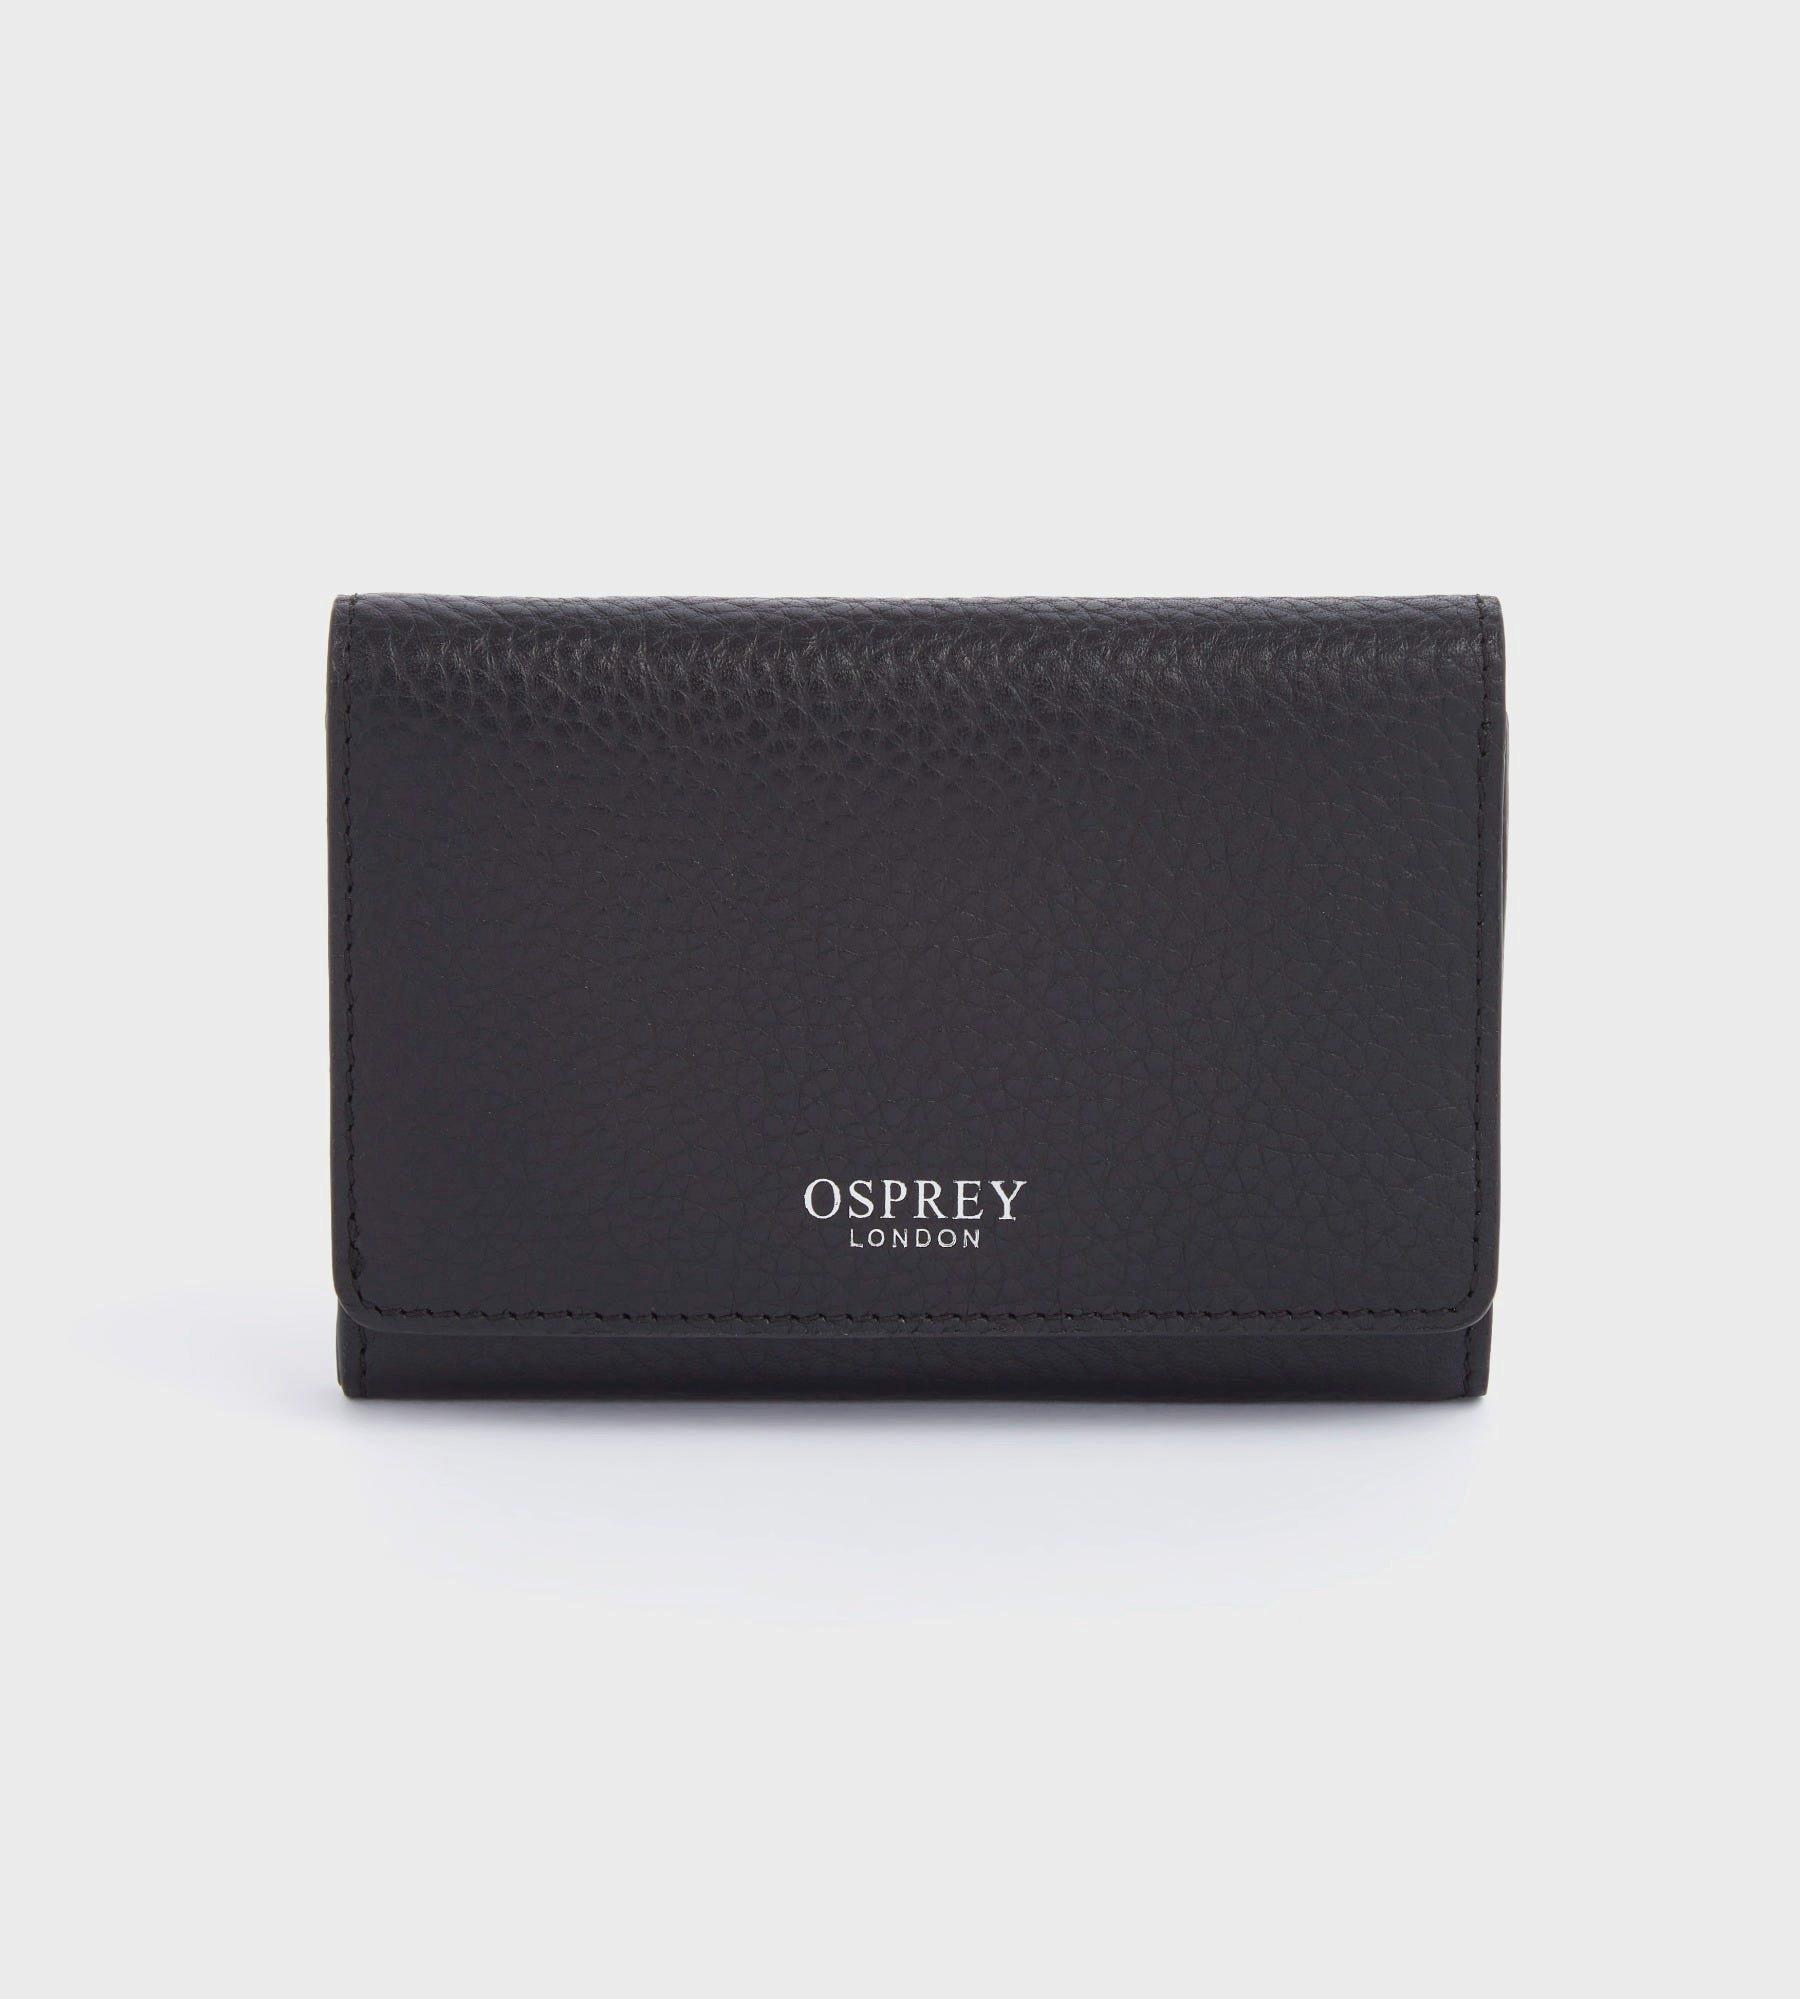 Osprey leather tote - Gem